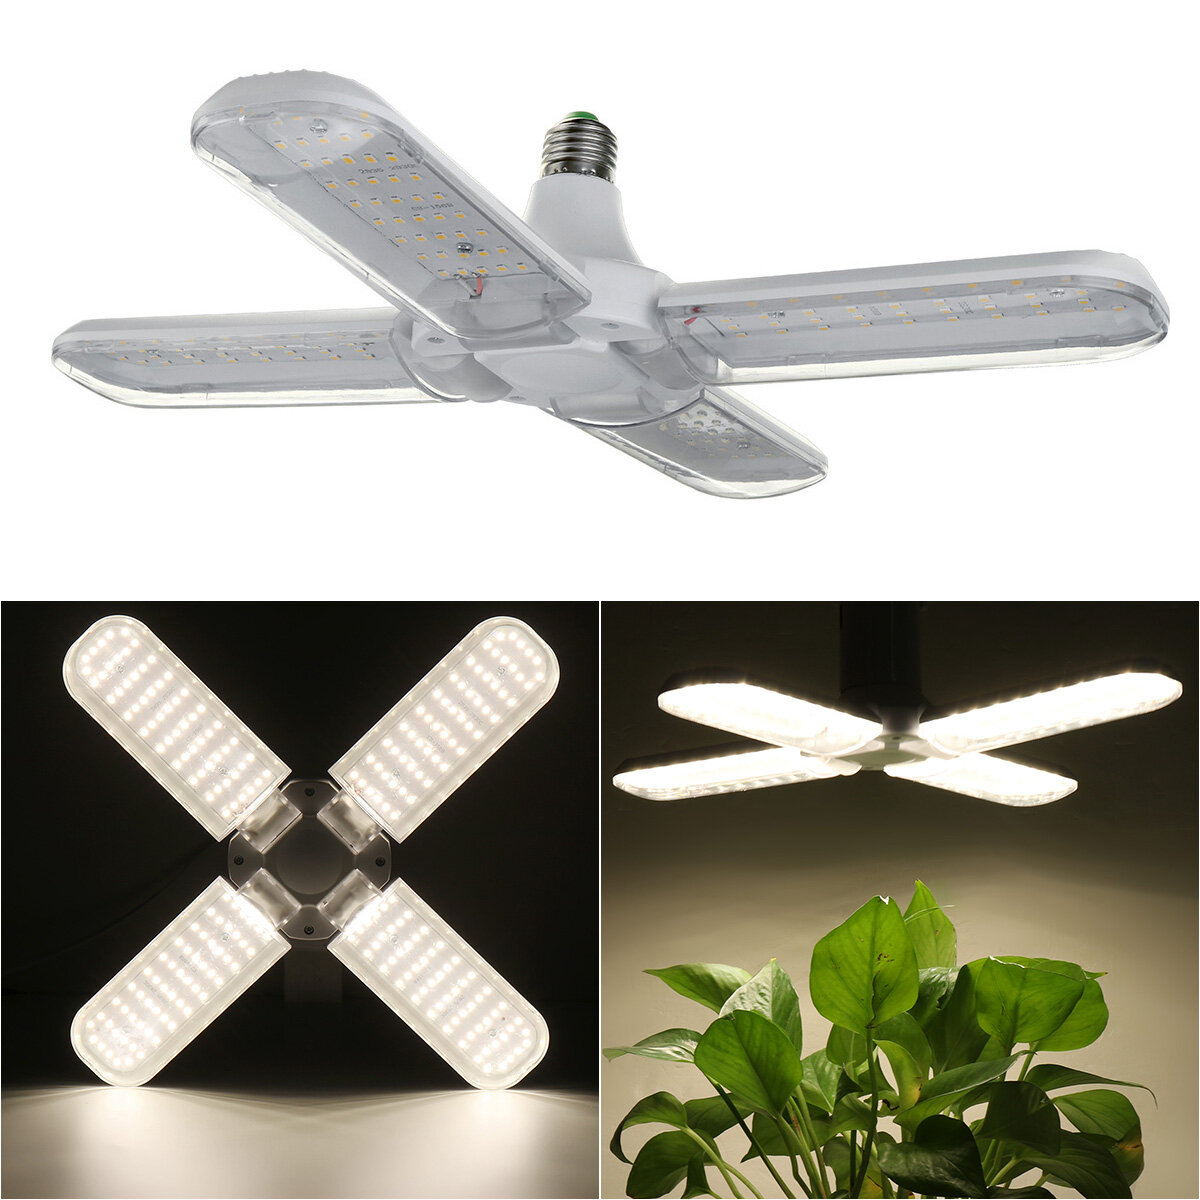 

AC110-265V 50W 2835 Four-Leaf Foldable E27 240 LED Grow Light Bulb With Lamp Holder Clip for Vegetables Growth